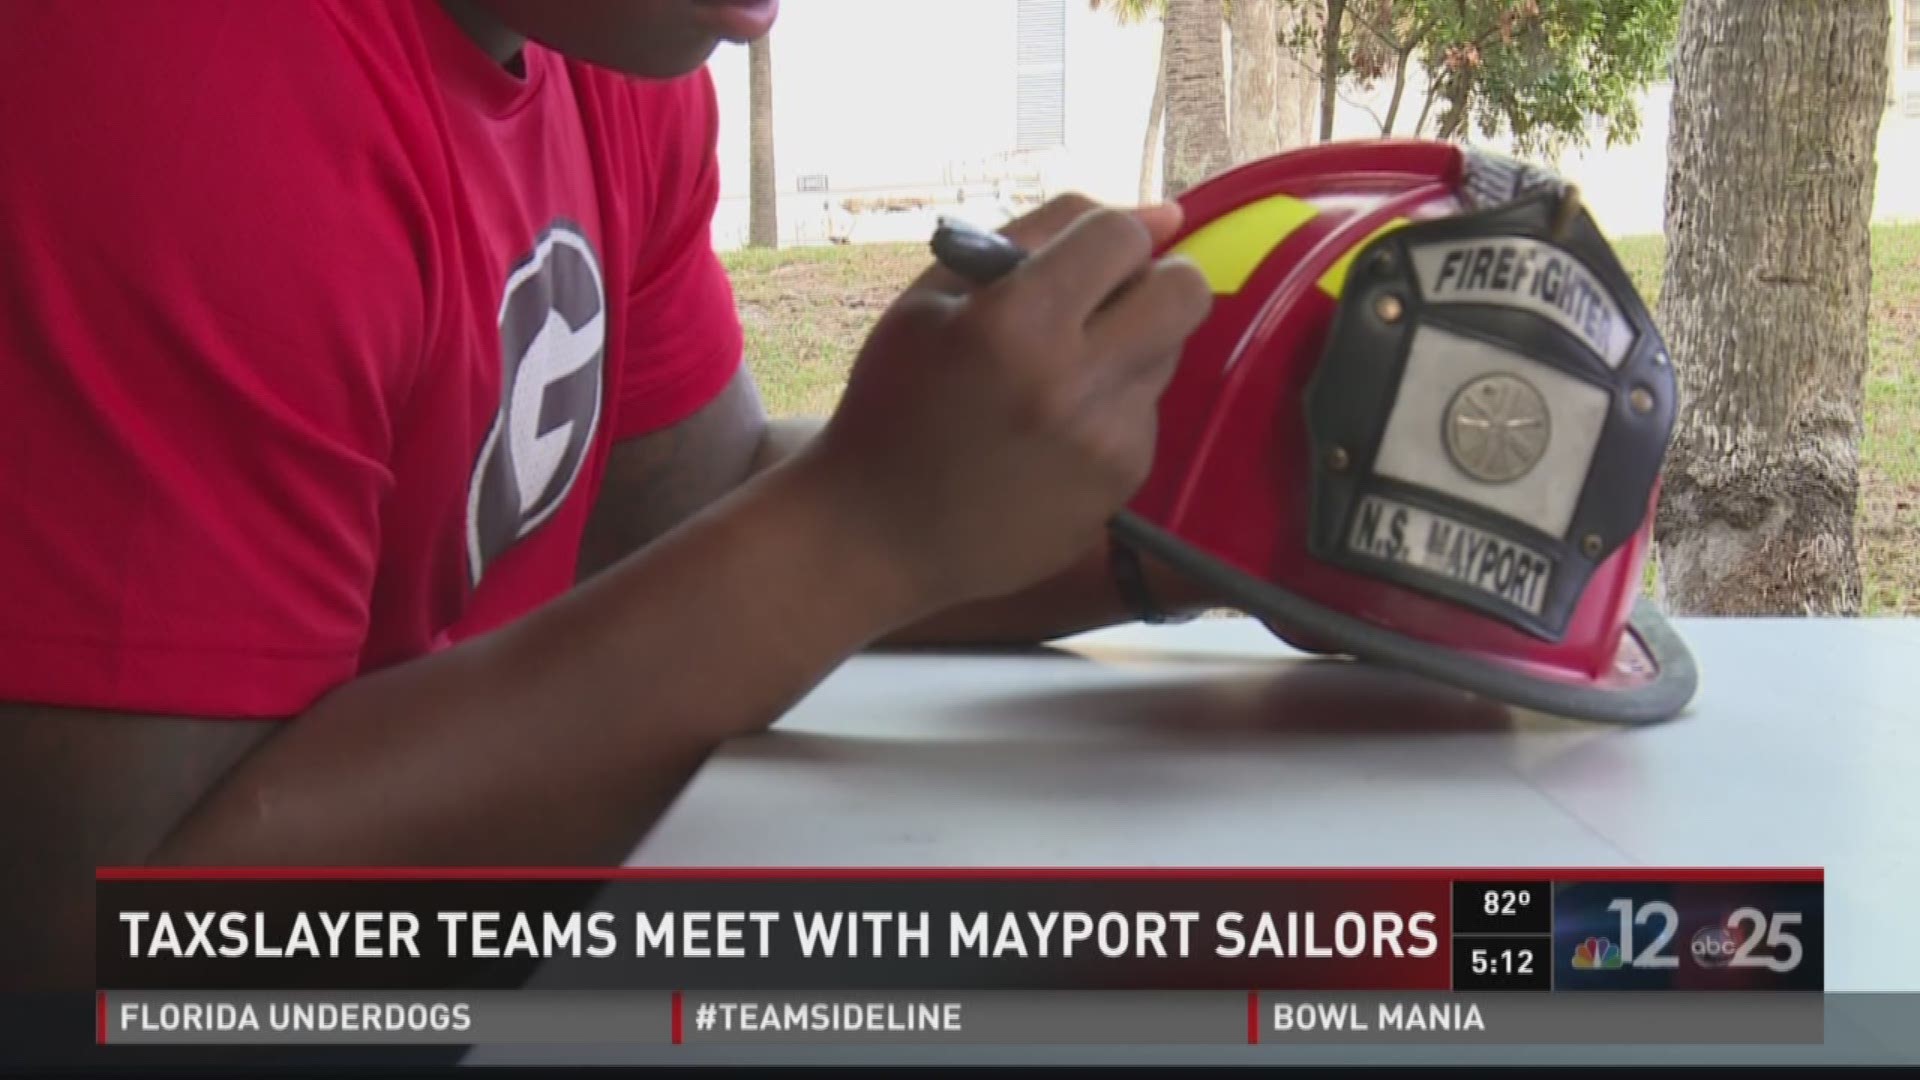 TaxSlayer Bowl teams meet with Mayport sailors